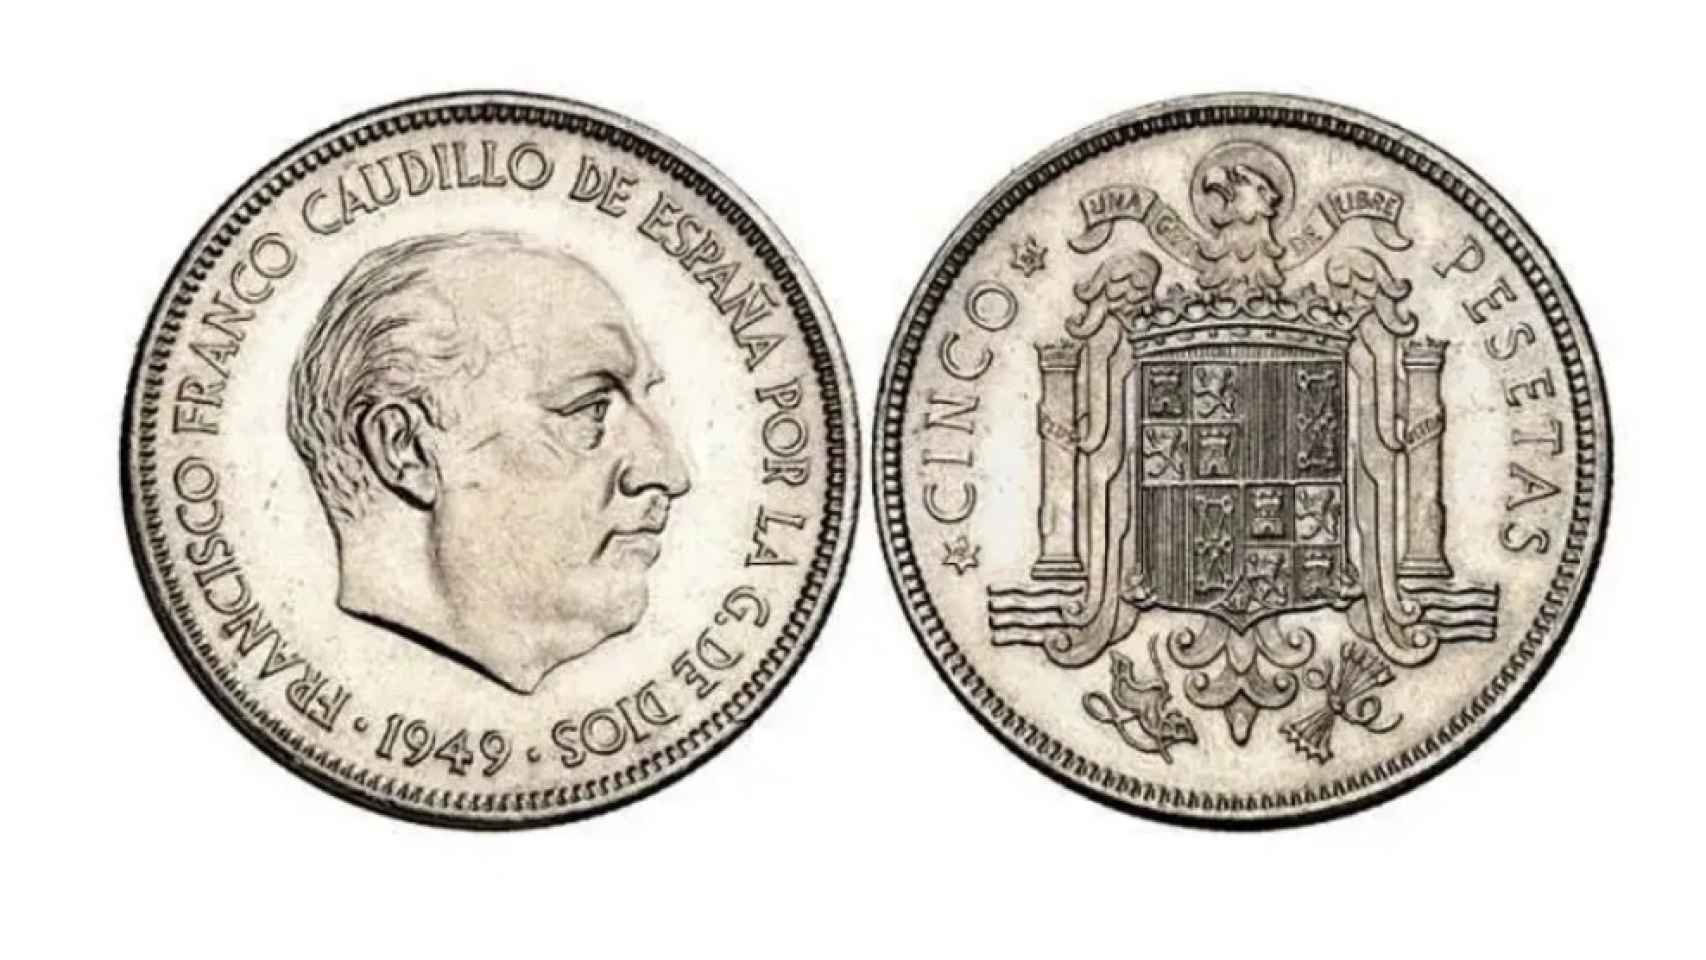 Cinco pesetas de 1949.